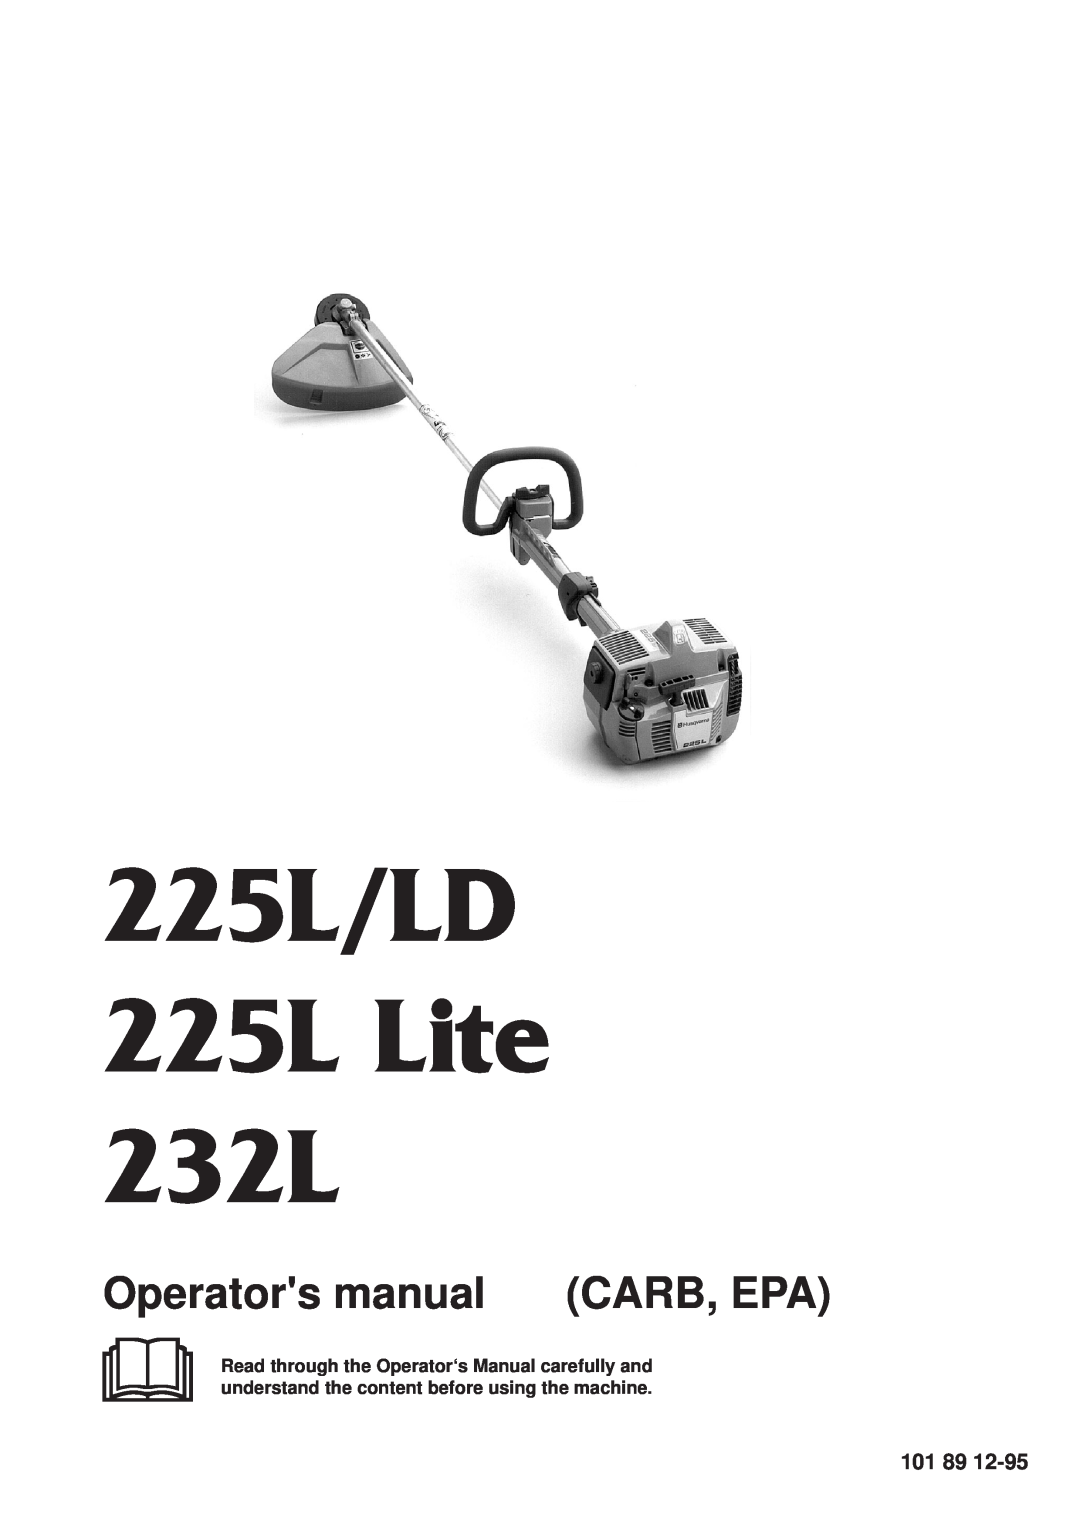 Husqvarna manual 225L/LD 225L Lite 232L, Operators manual, Carb, Epa 